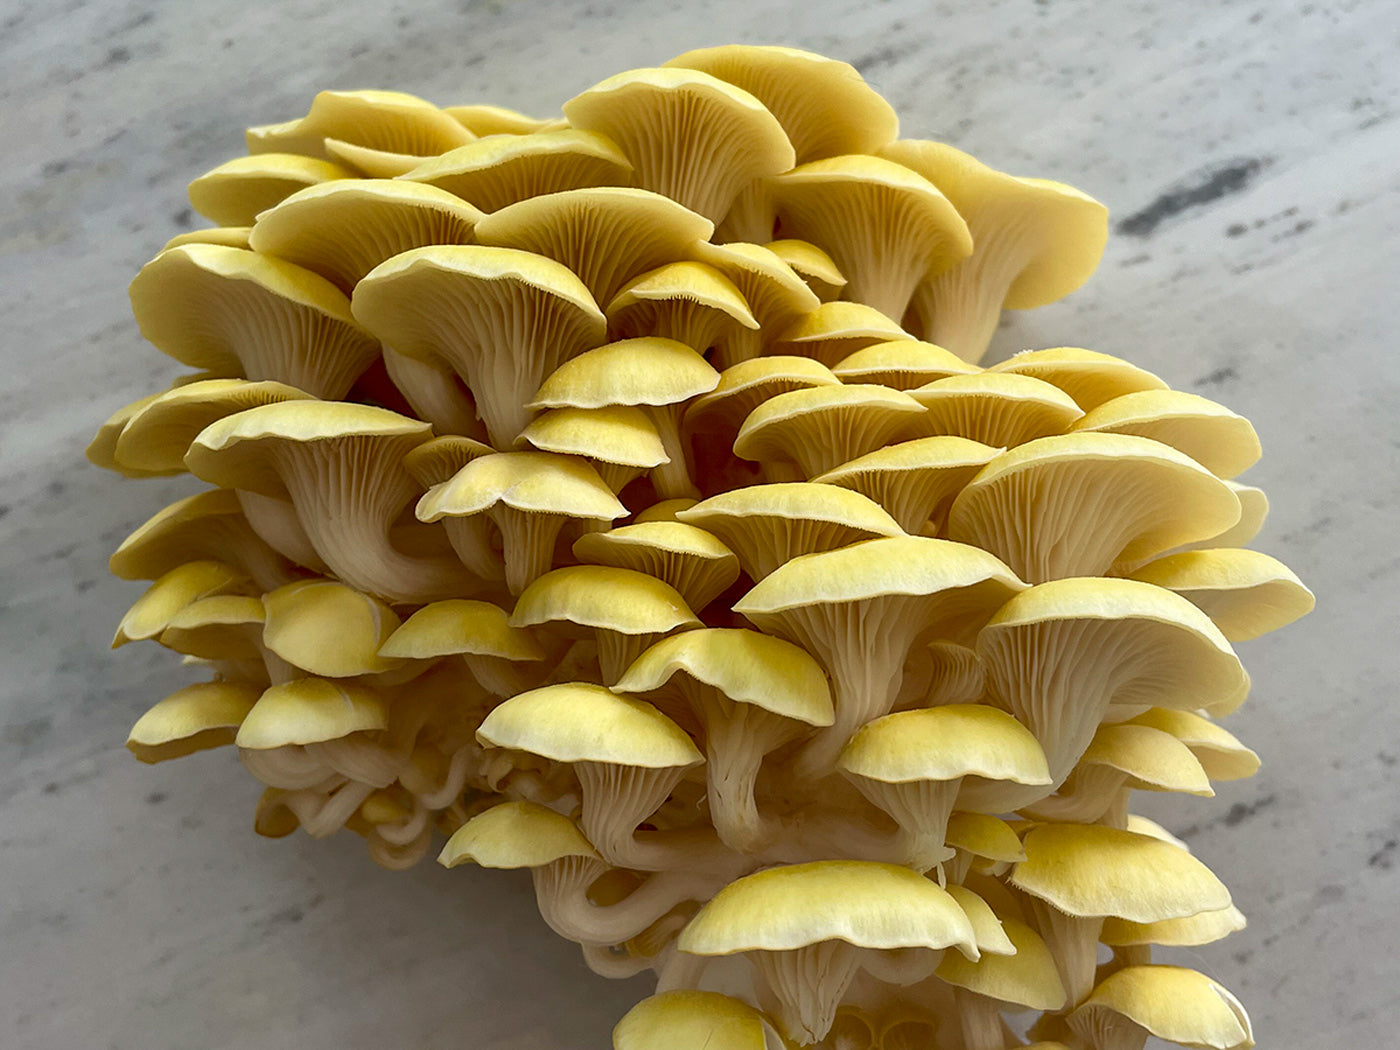 golden yellow oyster mushrooms